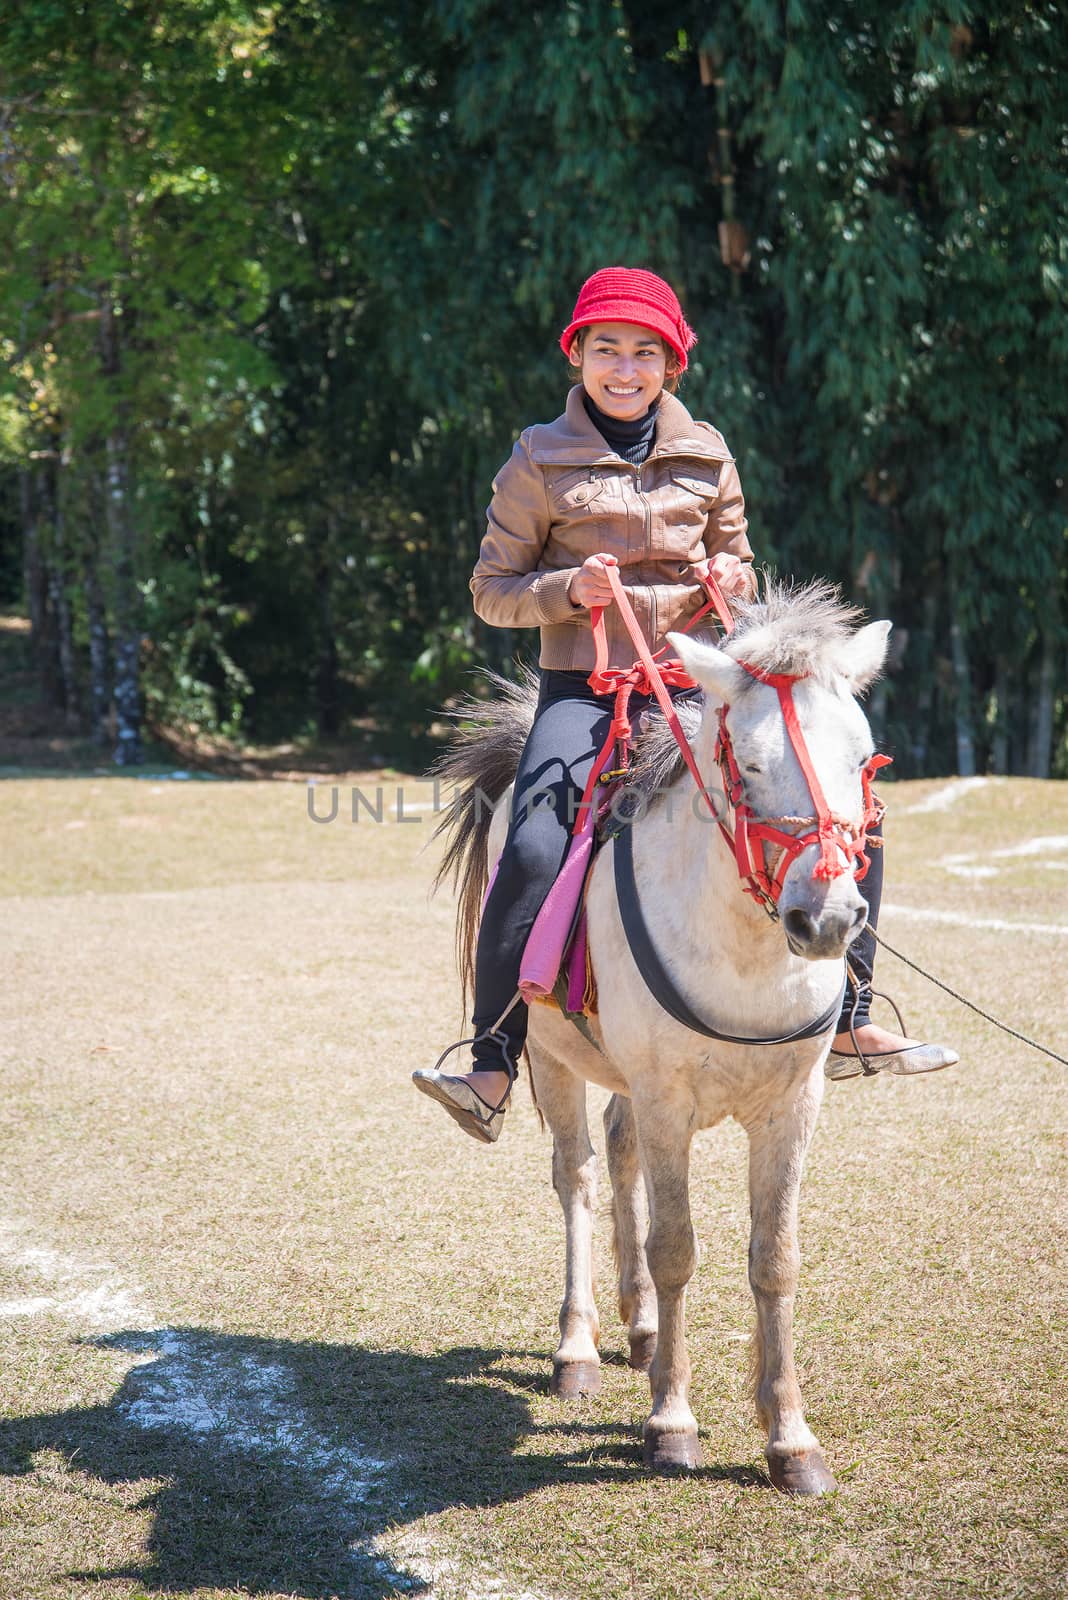 Asia women on horseback by jakgree